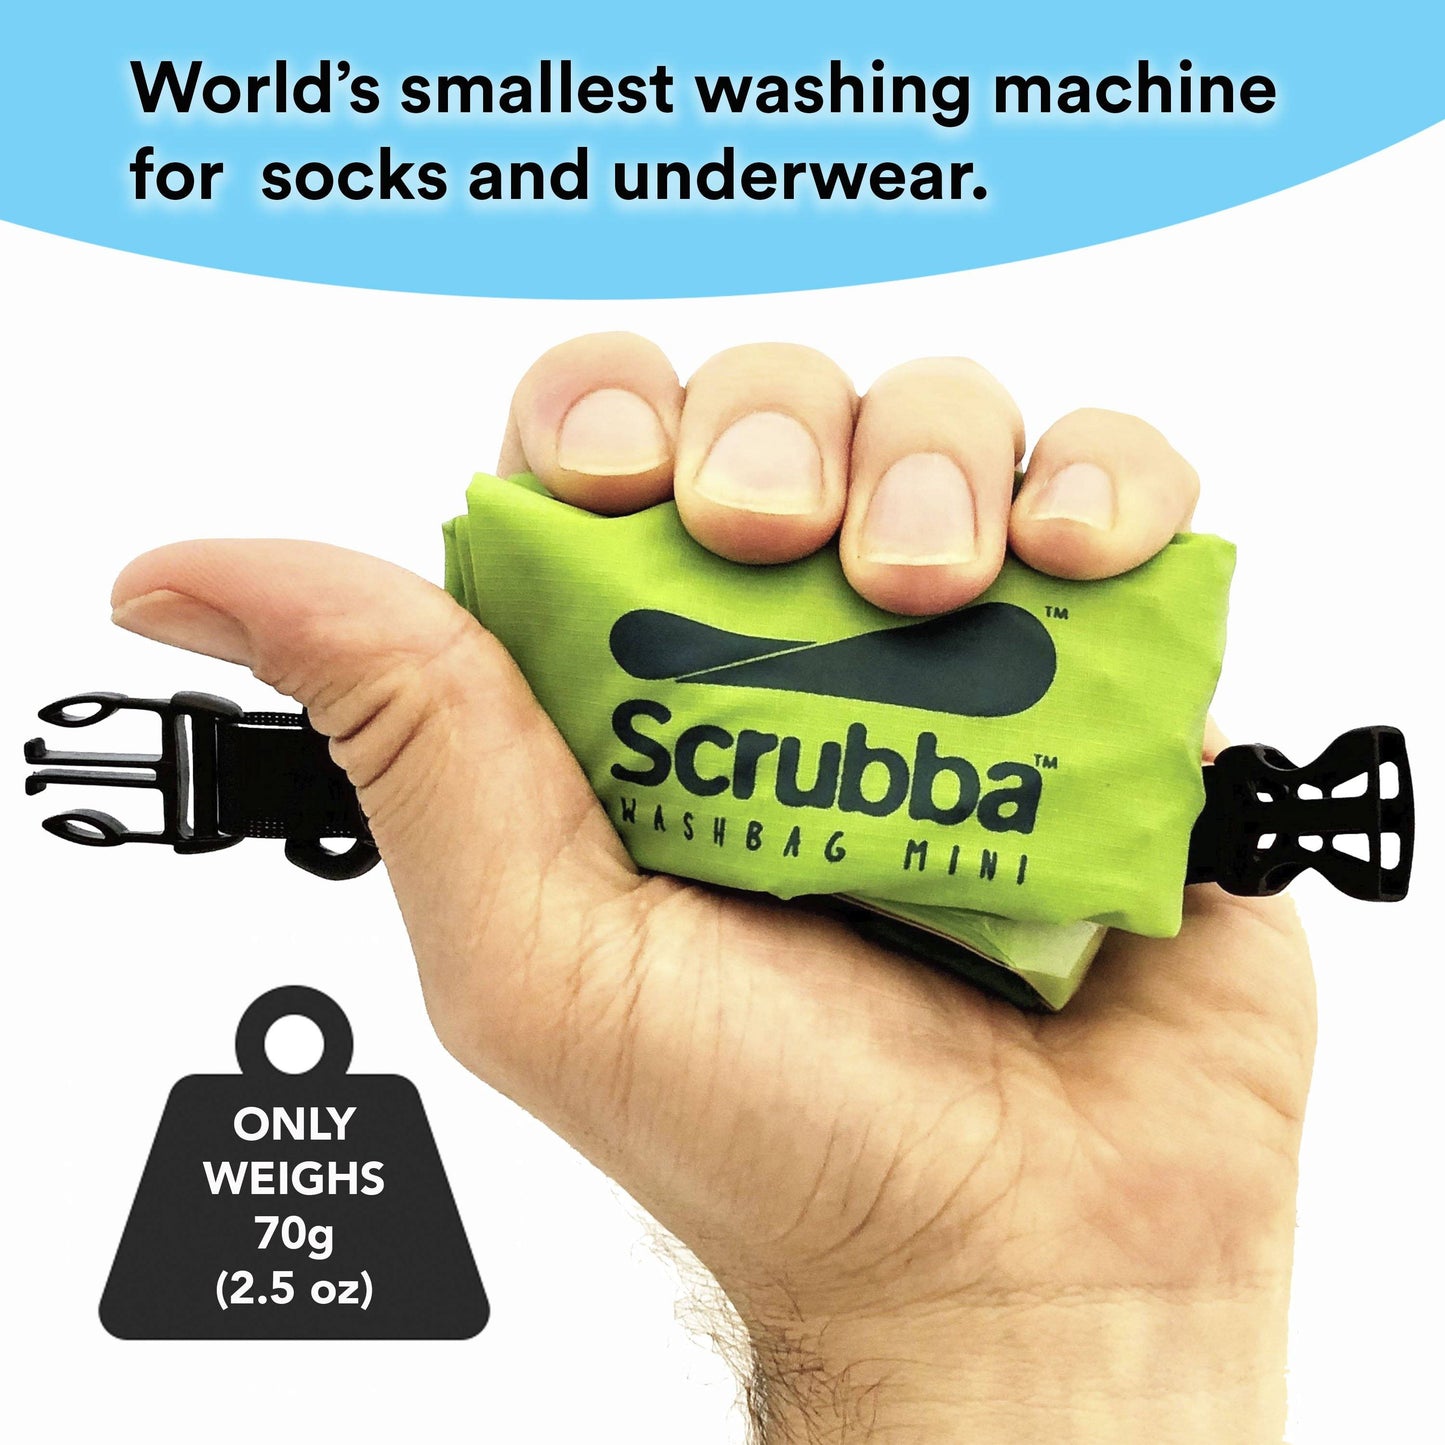 Scrubba wash bag MINI - tiny travel washing machine for travel - The Scrubba Wash Bag